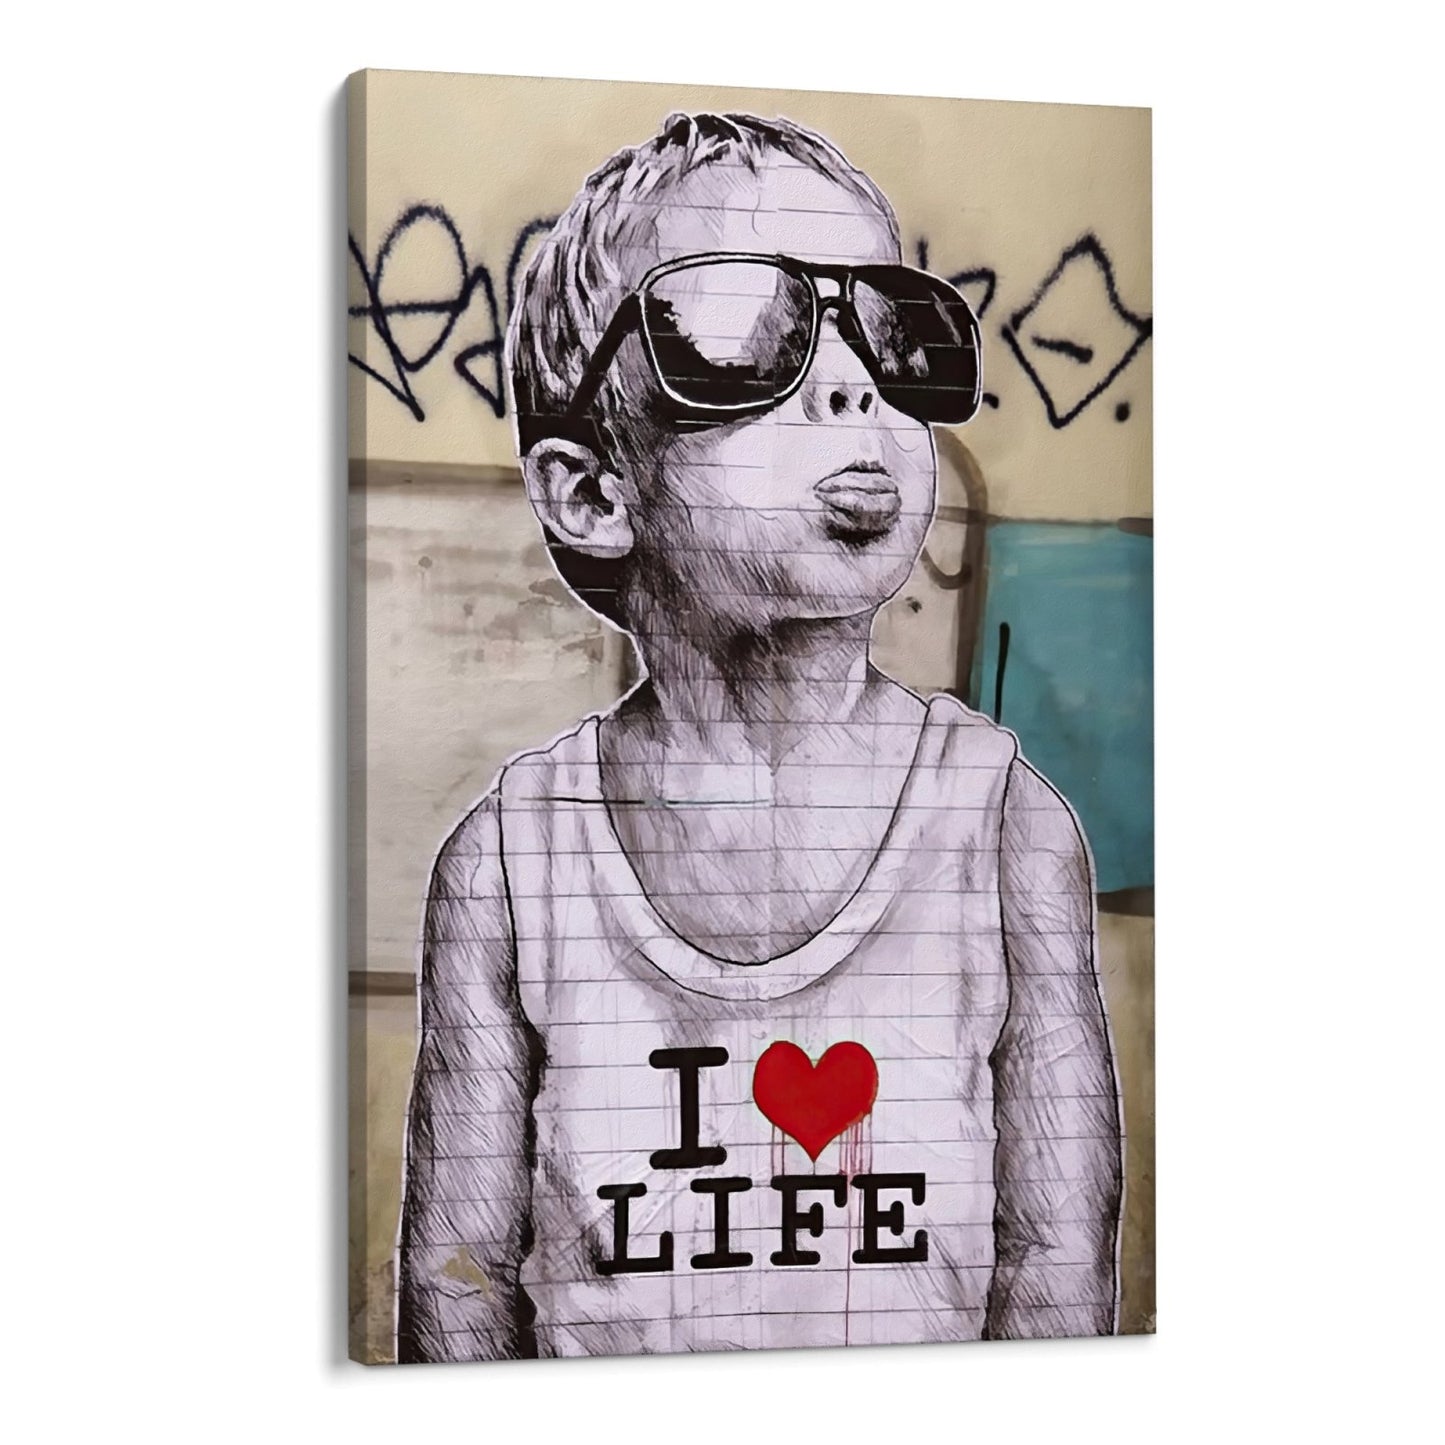 Volim život, Banksy